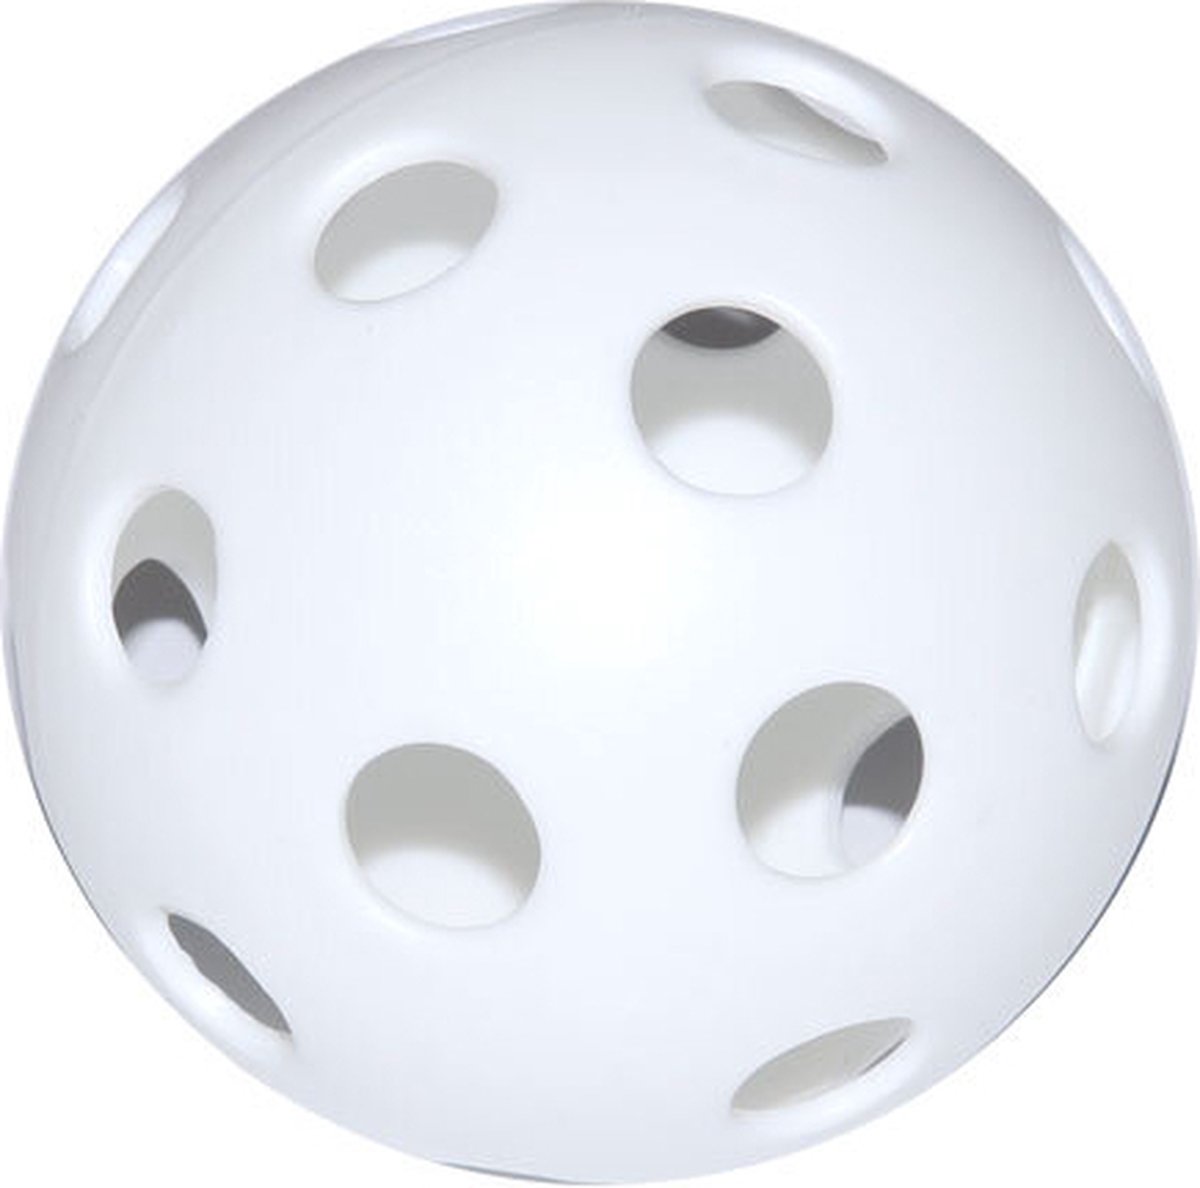 Benson - Softball - Wiffle - Plastic Softball - Wit - Official Size - 12 inch